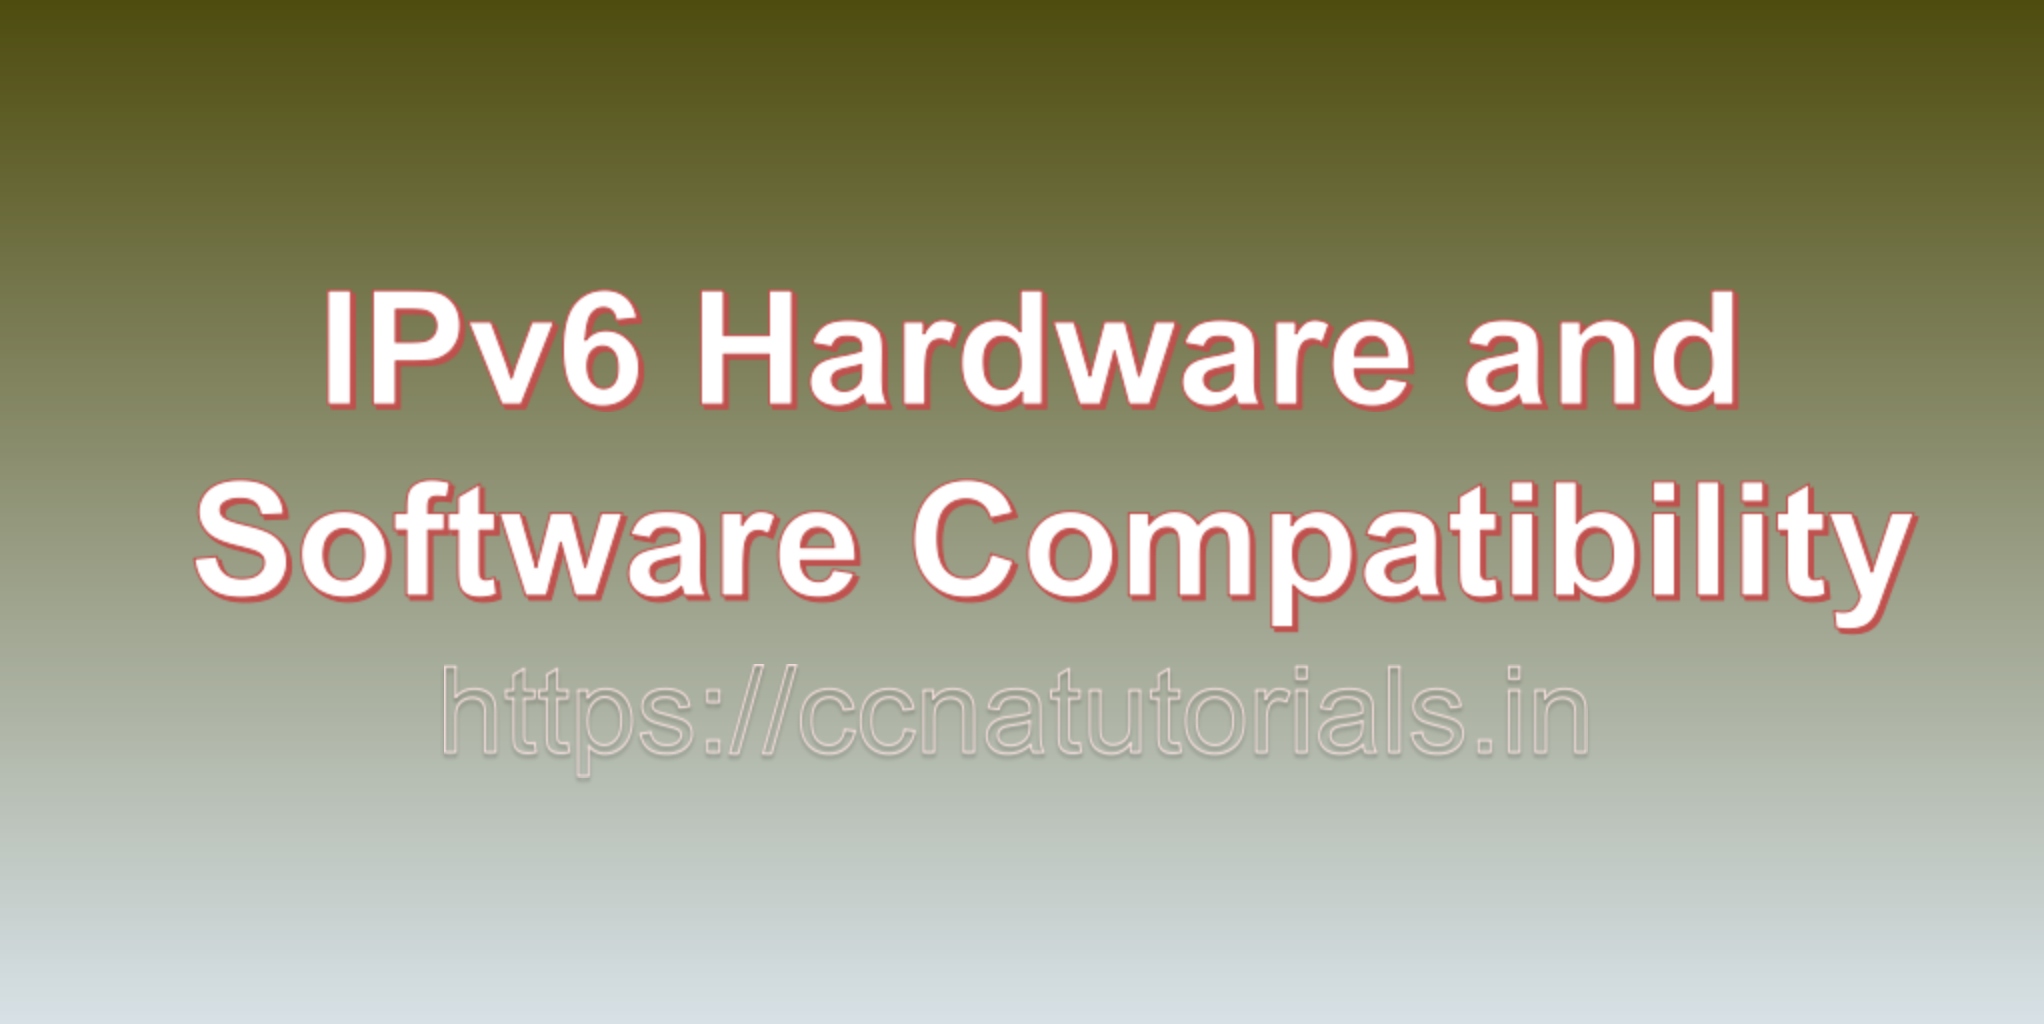 IPv6 Hardware and Software Compatibility, ccna, ccna tutorials